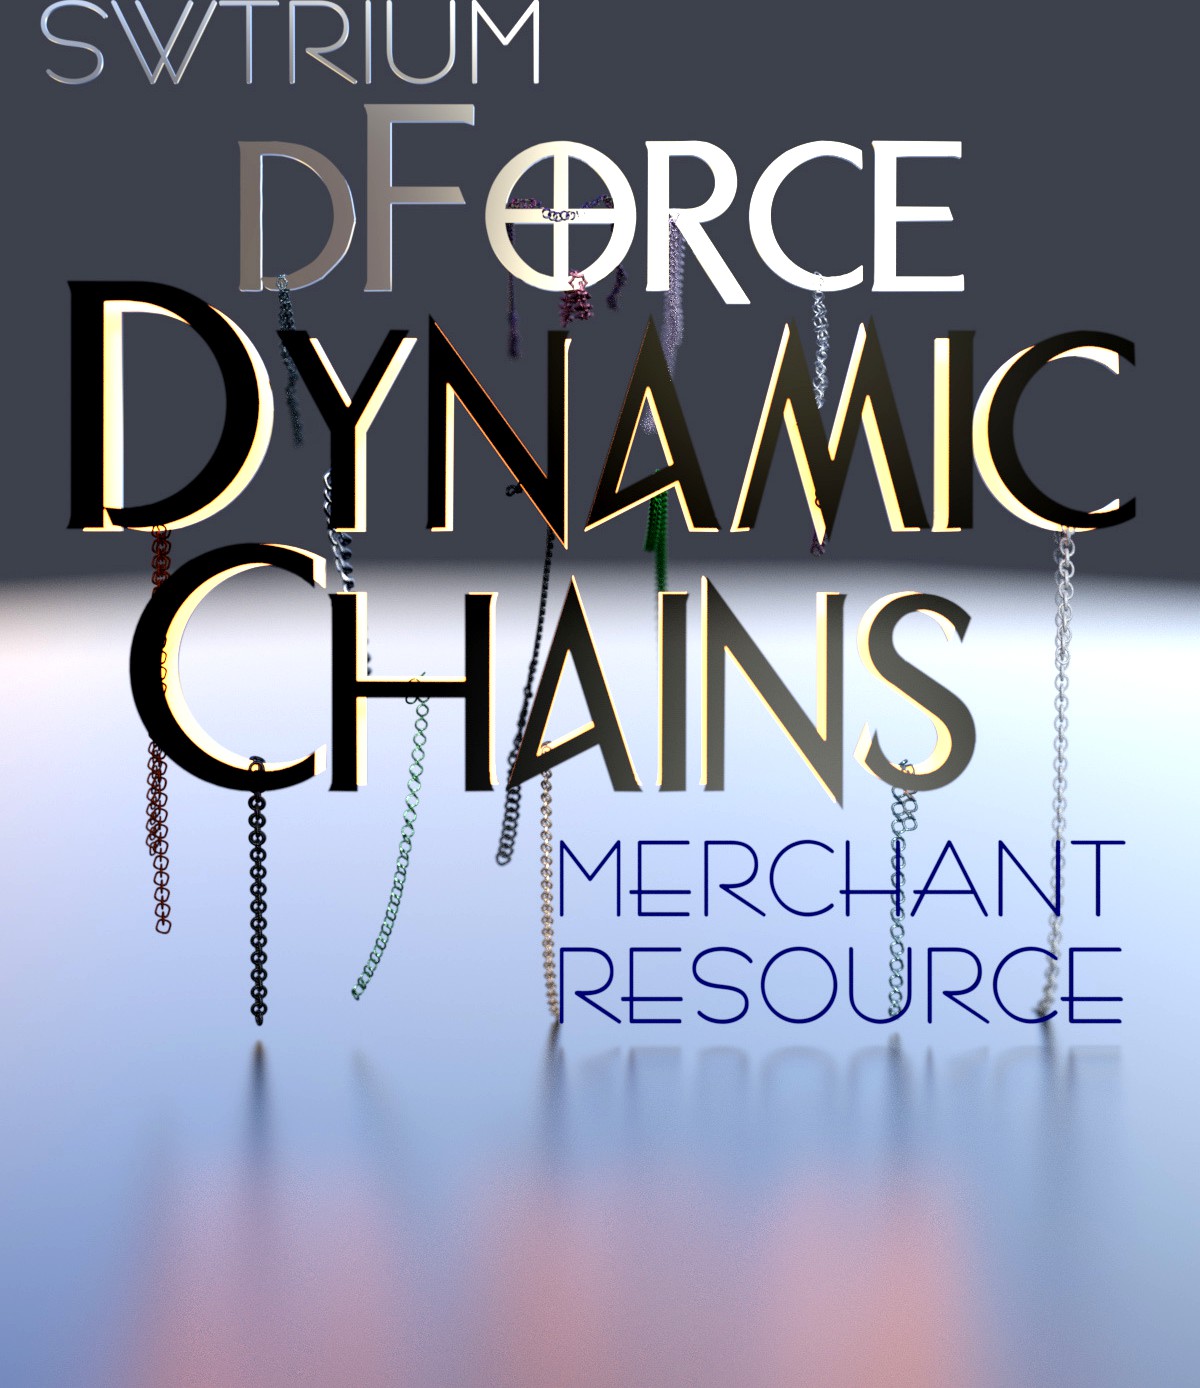 SWT dForce Dynamic Chains Merchant Resource